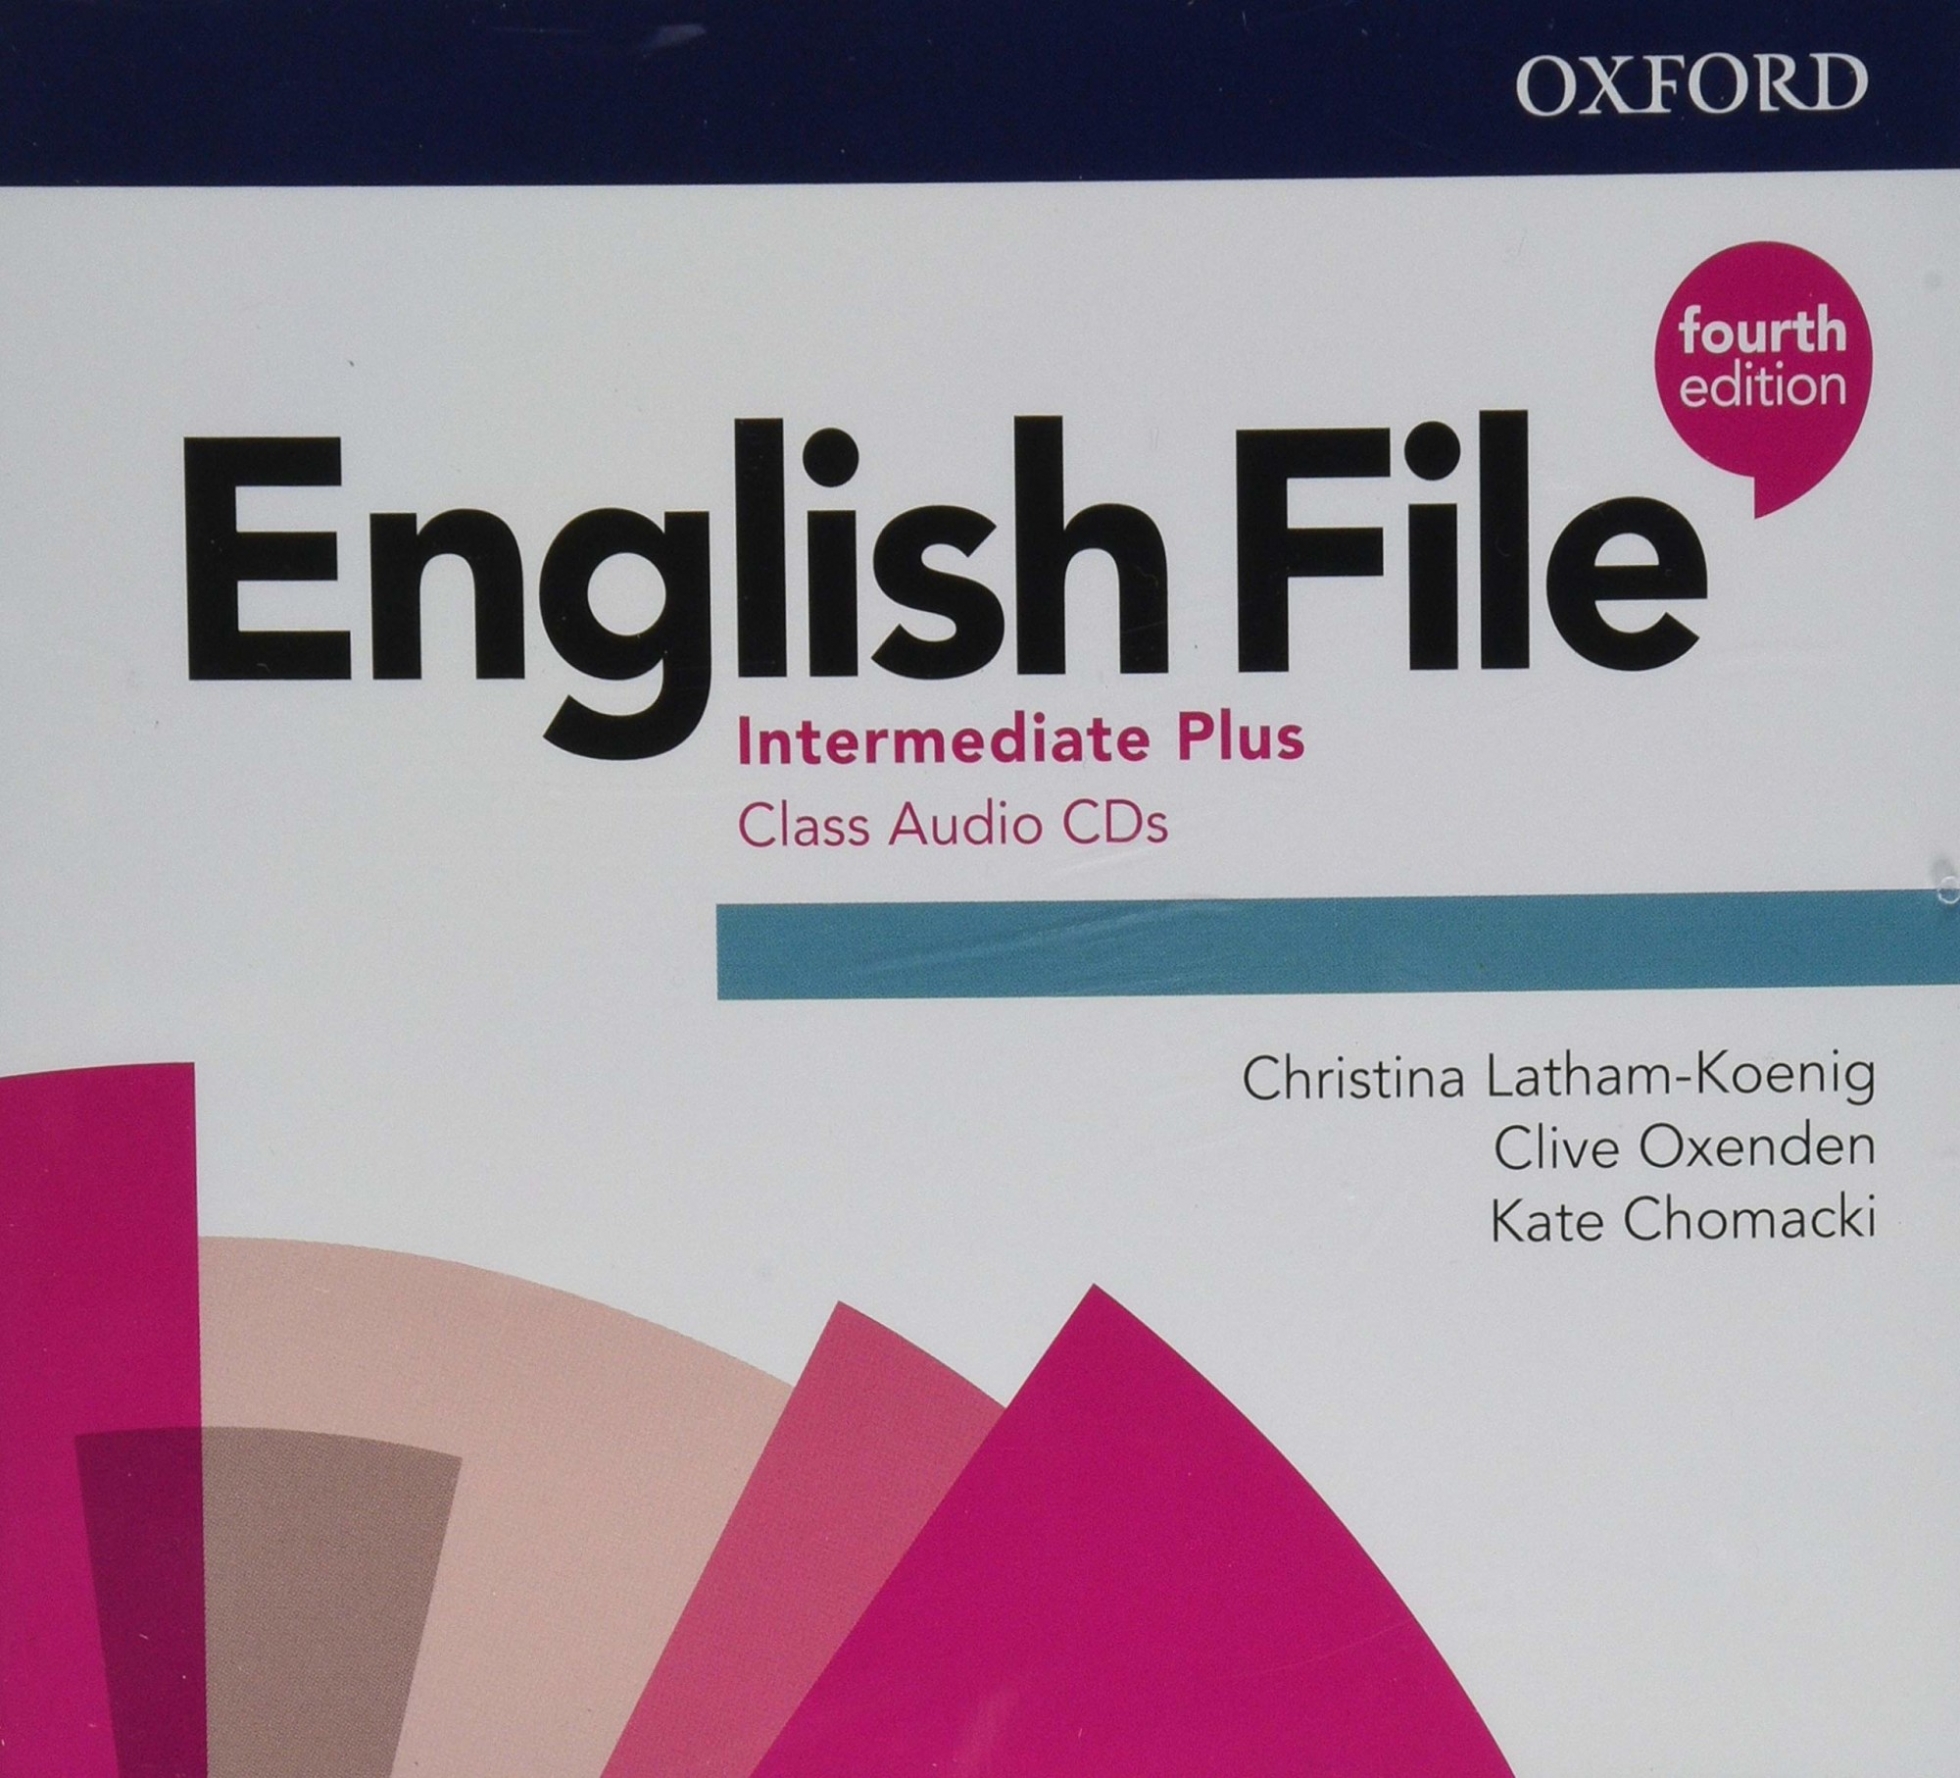 Oxenden Clive, Christina Latham-Koenig, Chomacki Kate Audio CD. English File. Intermediate Plus 